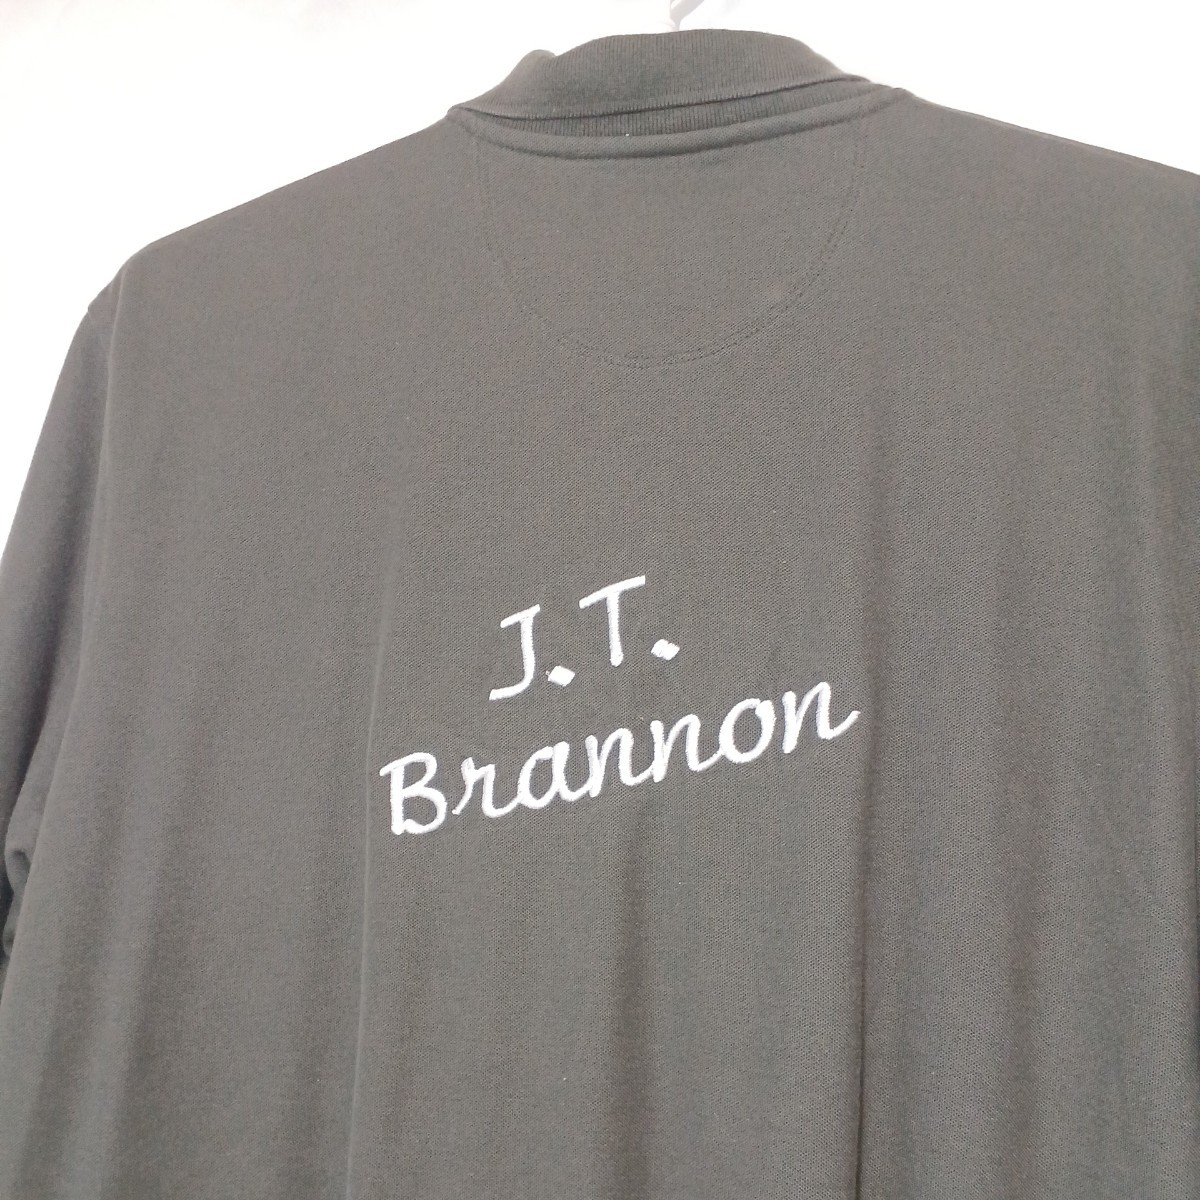 zcl-59♪アメリカユーズドbowling pro shopJ.T.Brannon背刺繍ネームポロシャツUS-XLサイズ(日本サイズ2XL相当)アーミーカラー_画像5